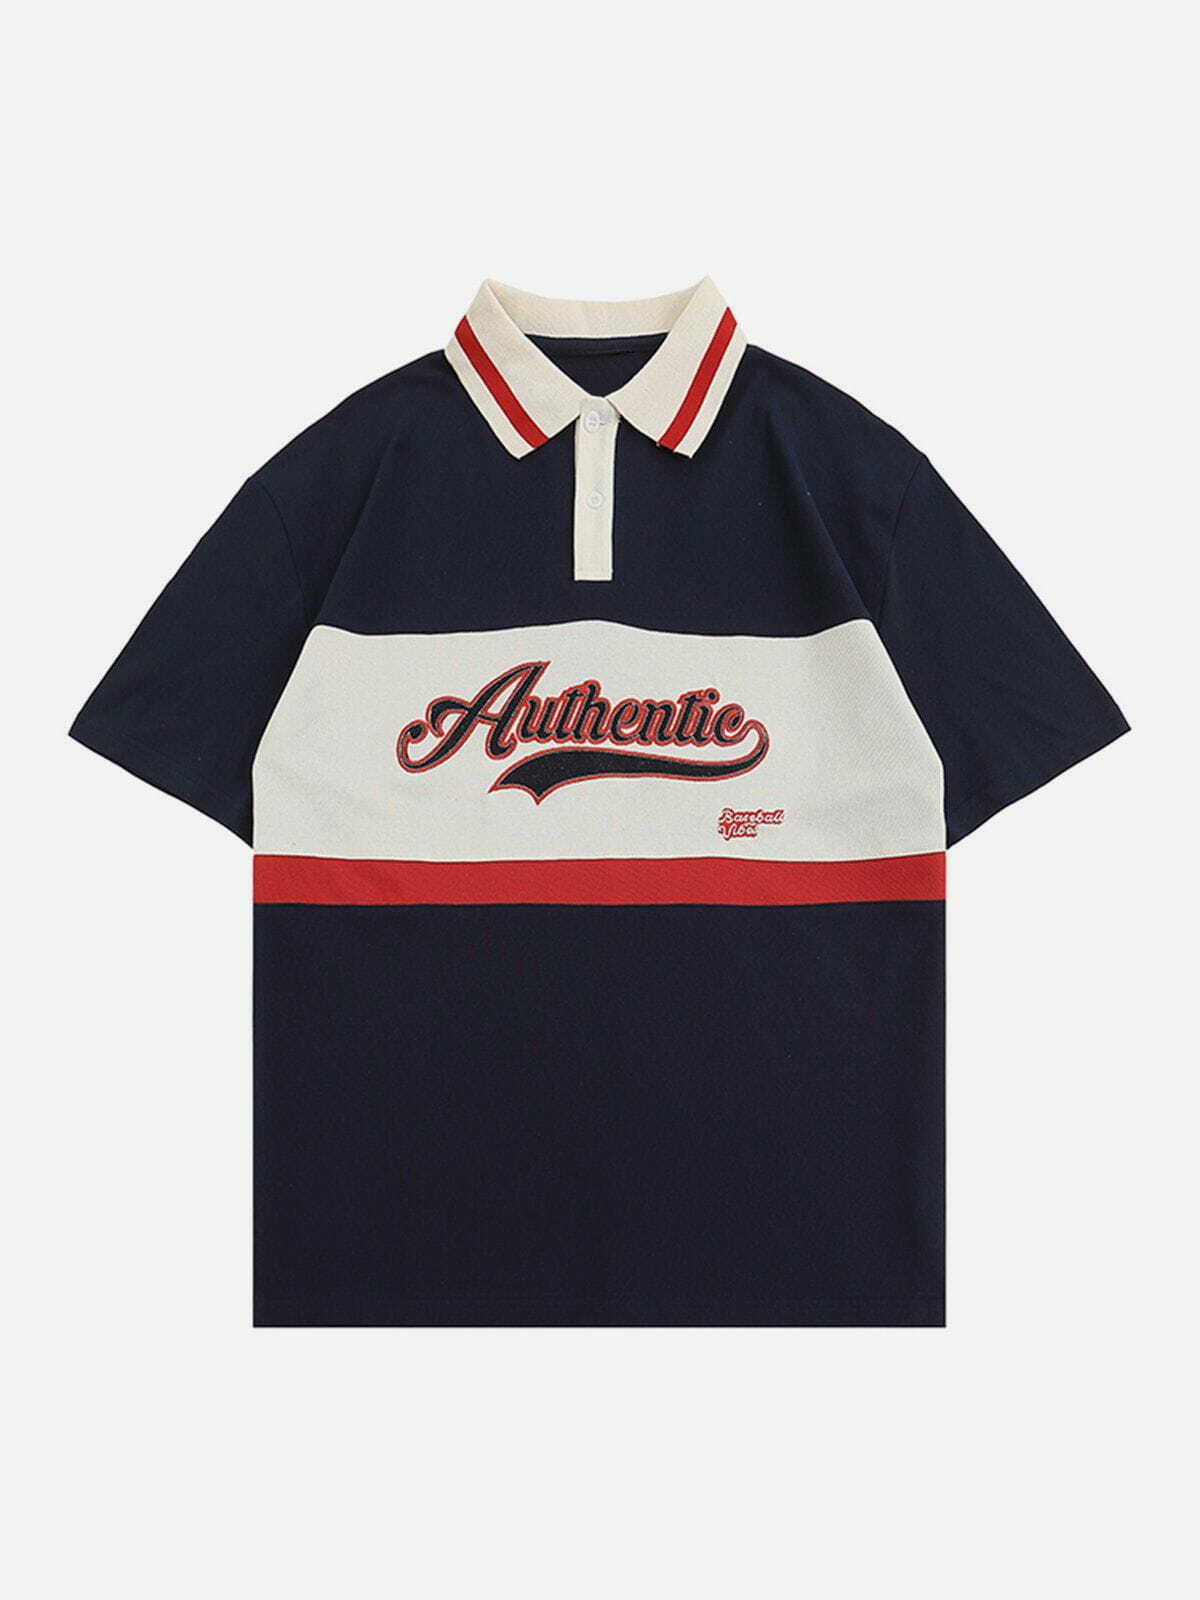 retro baseball splicing tee edgy  urban streetwear shirt 1254